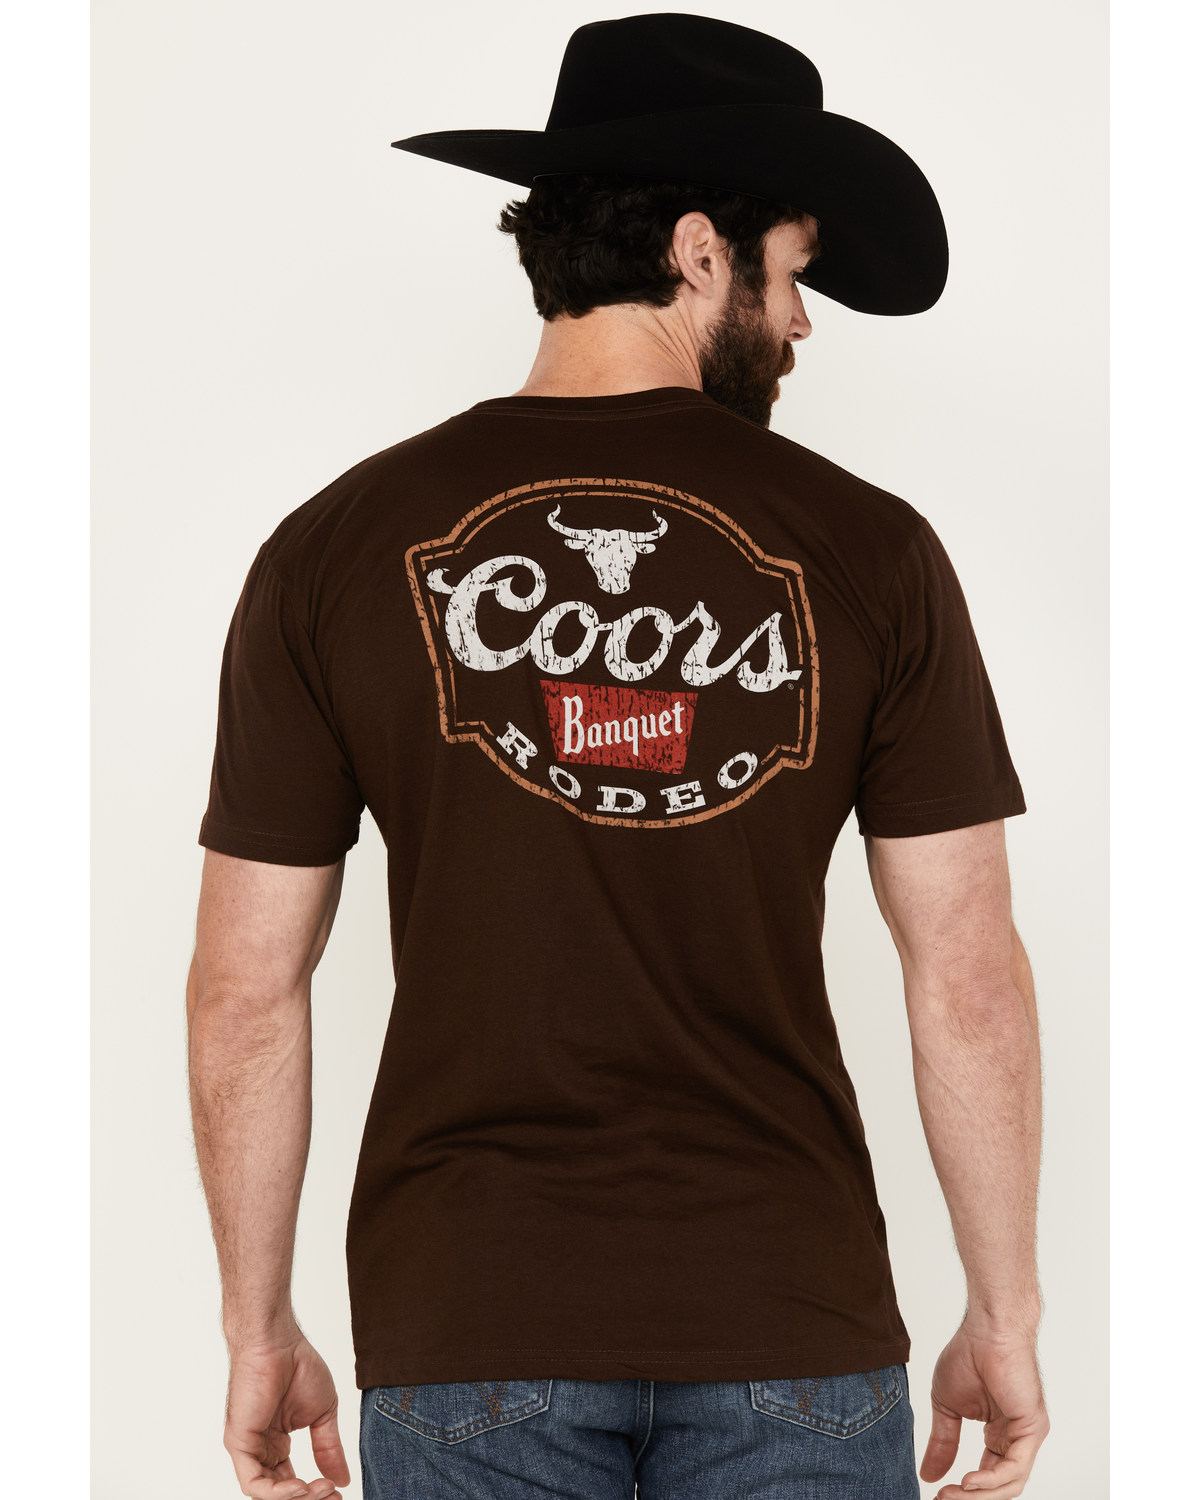 Changes Men's Coors Banquet Rodeo Short Sleeve Graphic T-Shirt